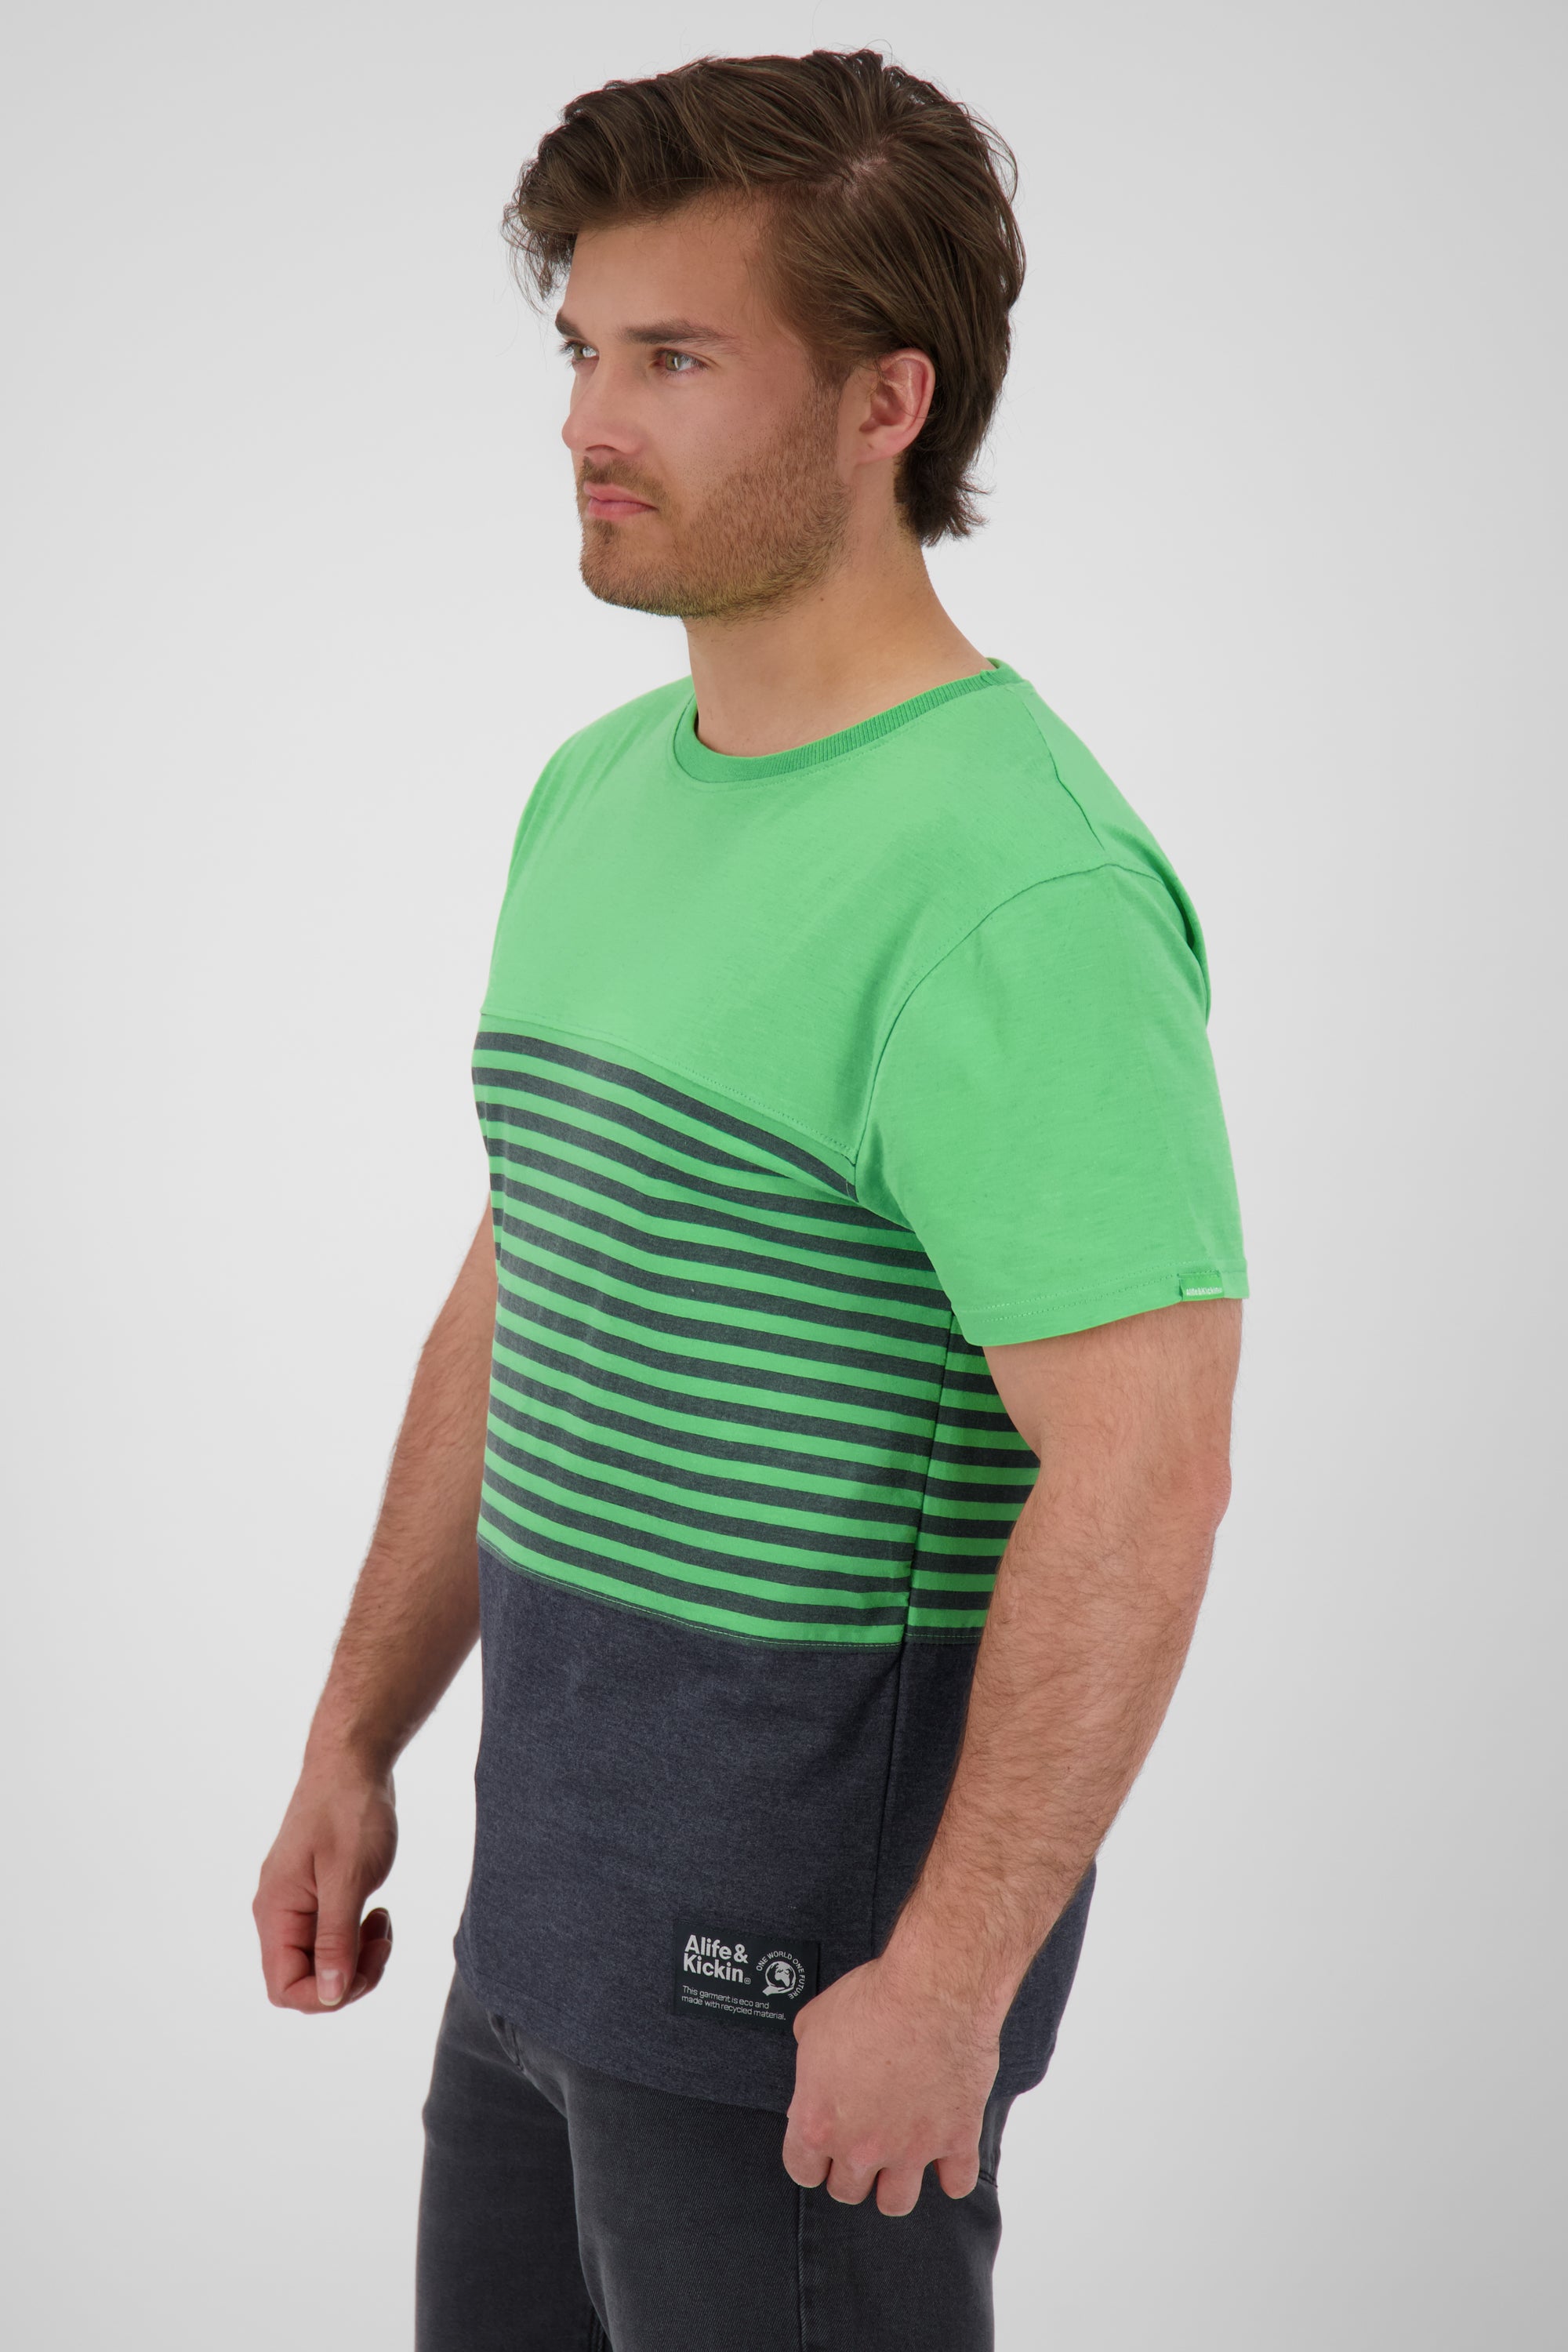 BenAK B - Farbenfrohes Herren T-Shirt für den Sommer Dunkelblau